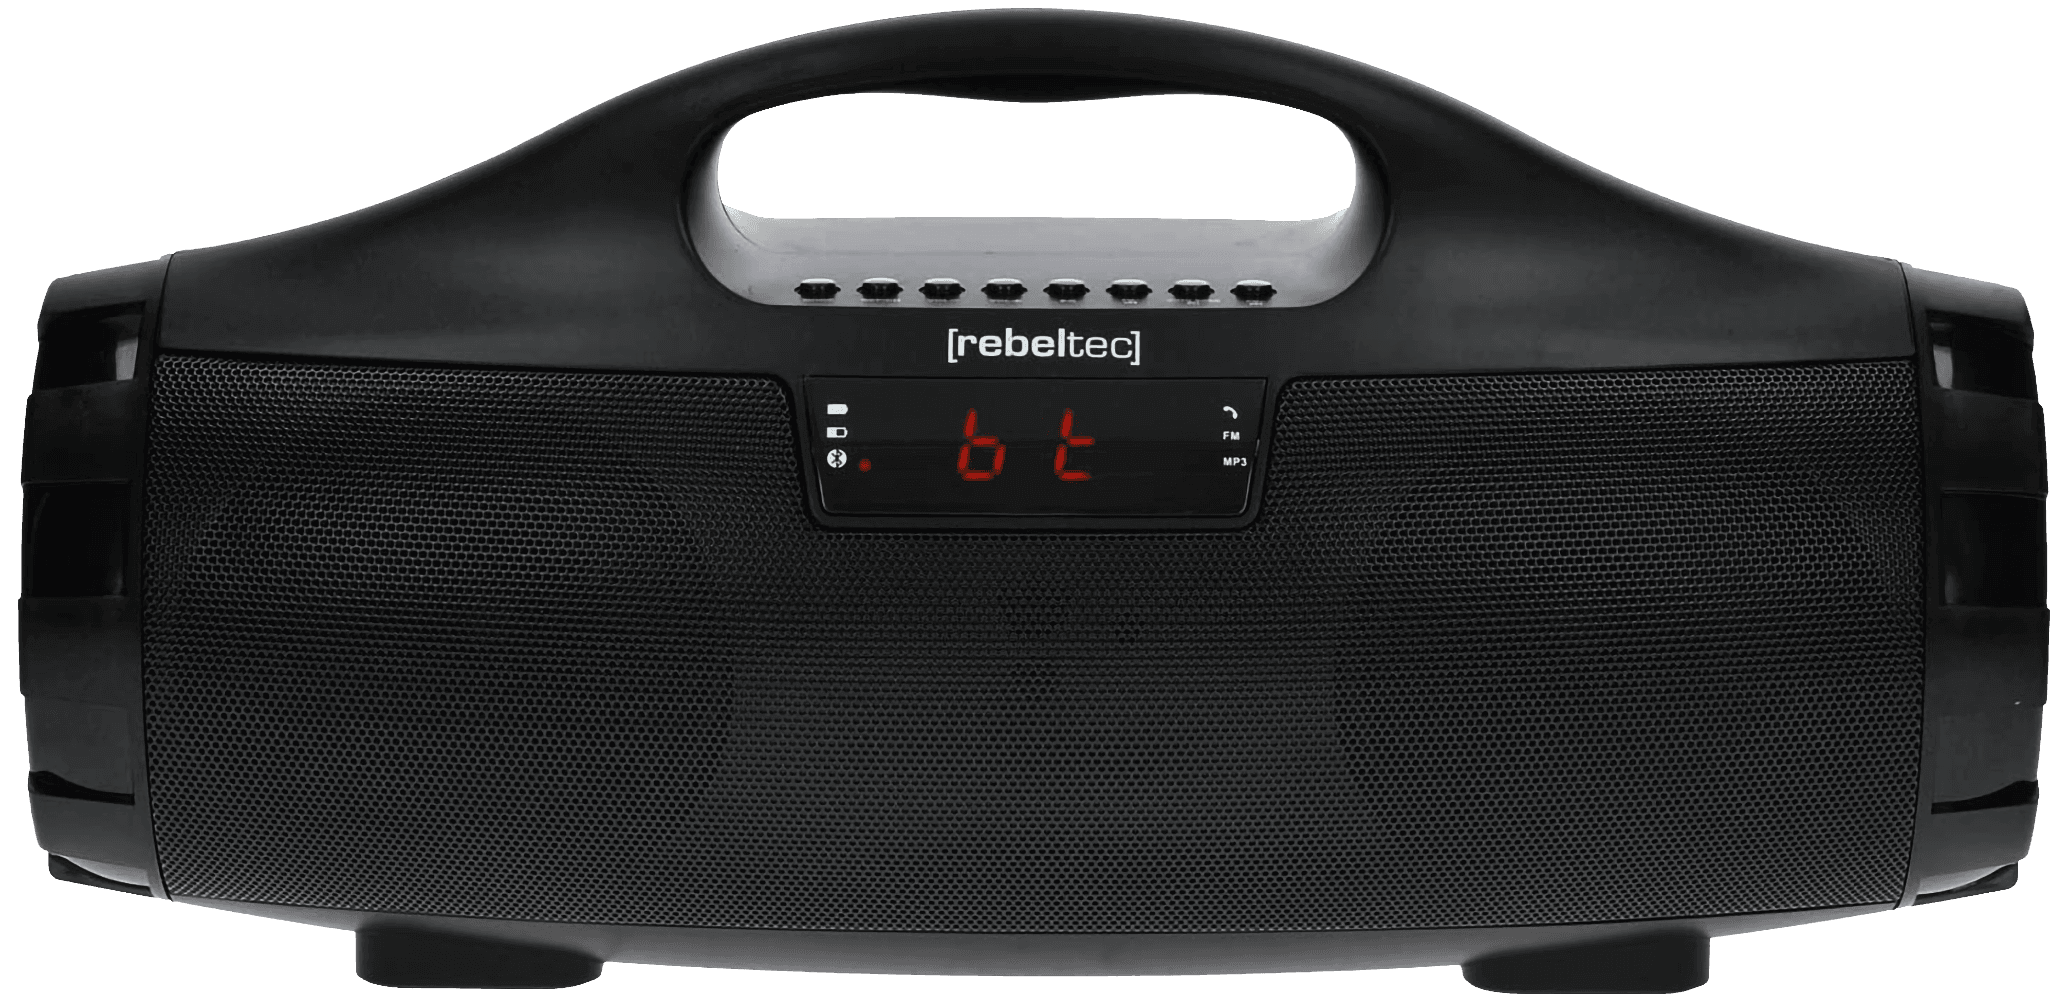 HTC U11 Plus kompatibilis bluetooth hangszóró Rebeltec Soundbox 390 fekete